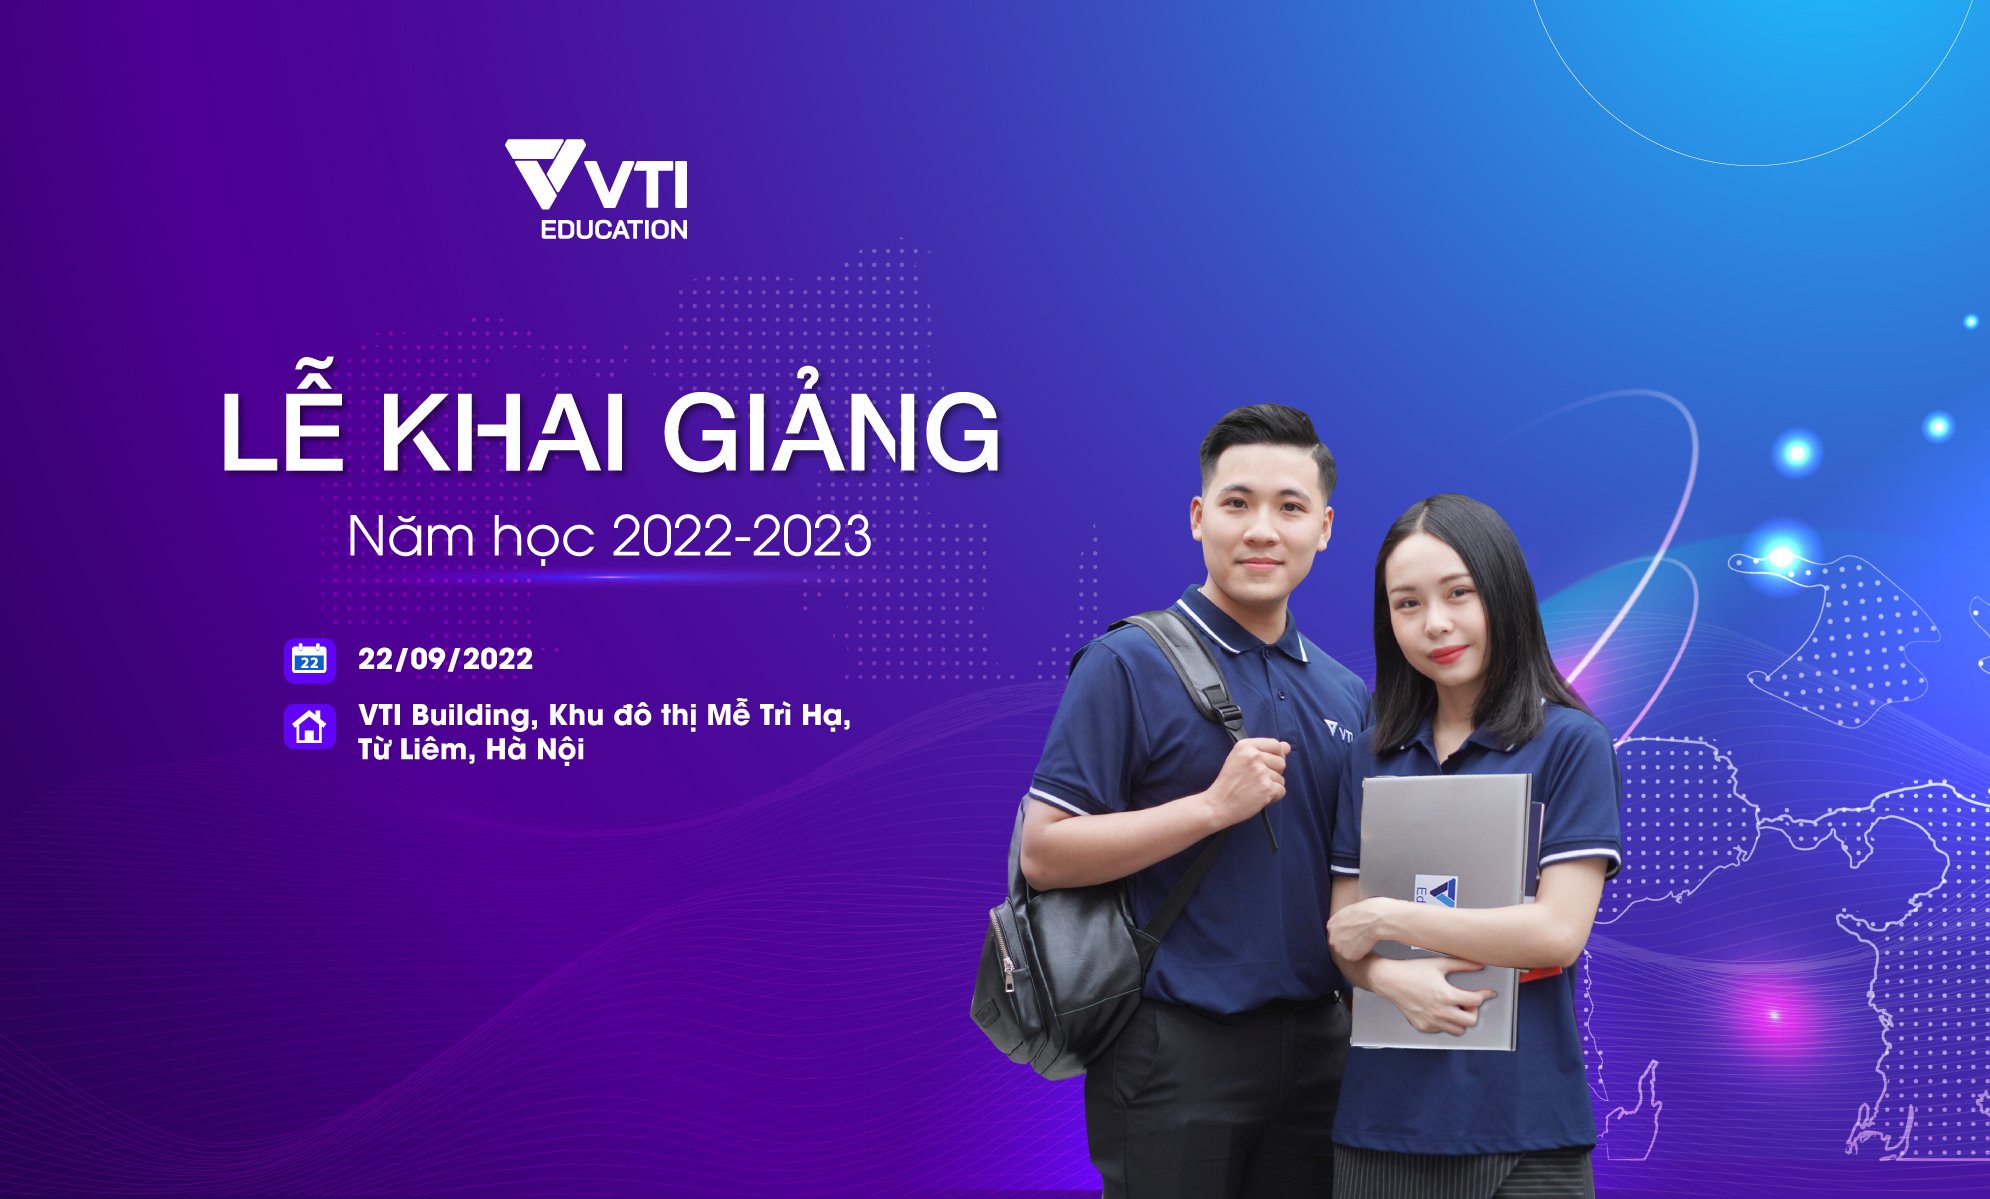 LỄ KHAI GIẢNG NĂM HỌC 2022-2023 | VTI Education